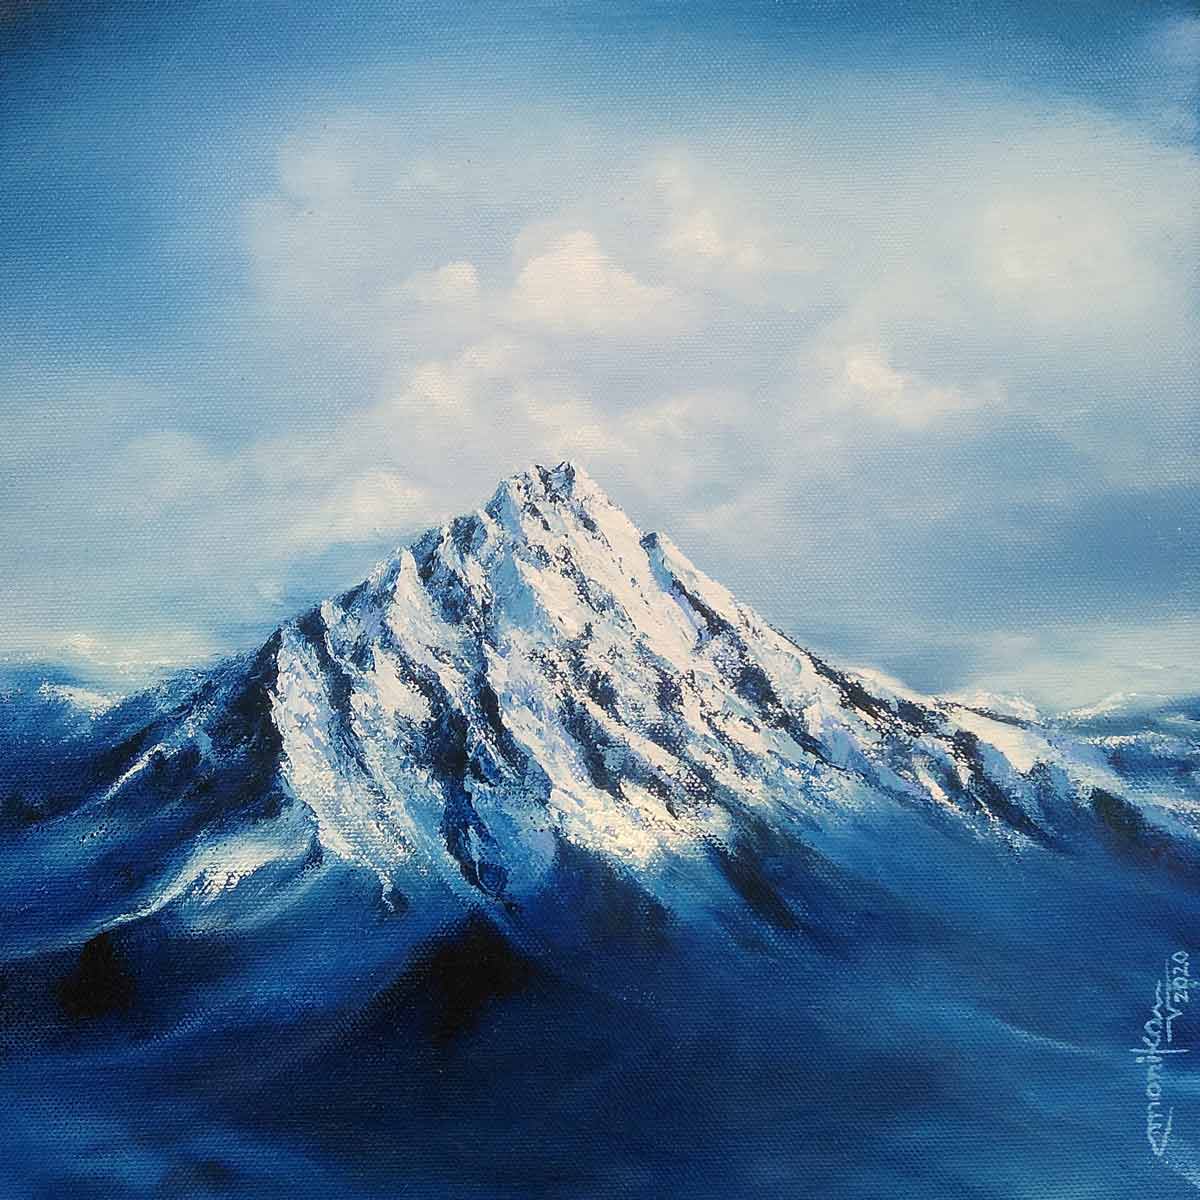 Realism Painting with Oil on Canvas "Mountain-5" art by Monika Vishwakarma